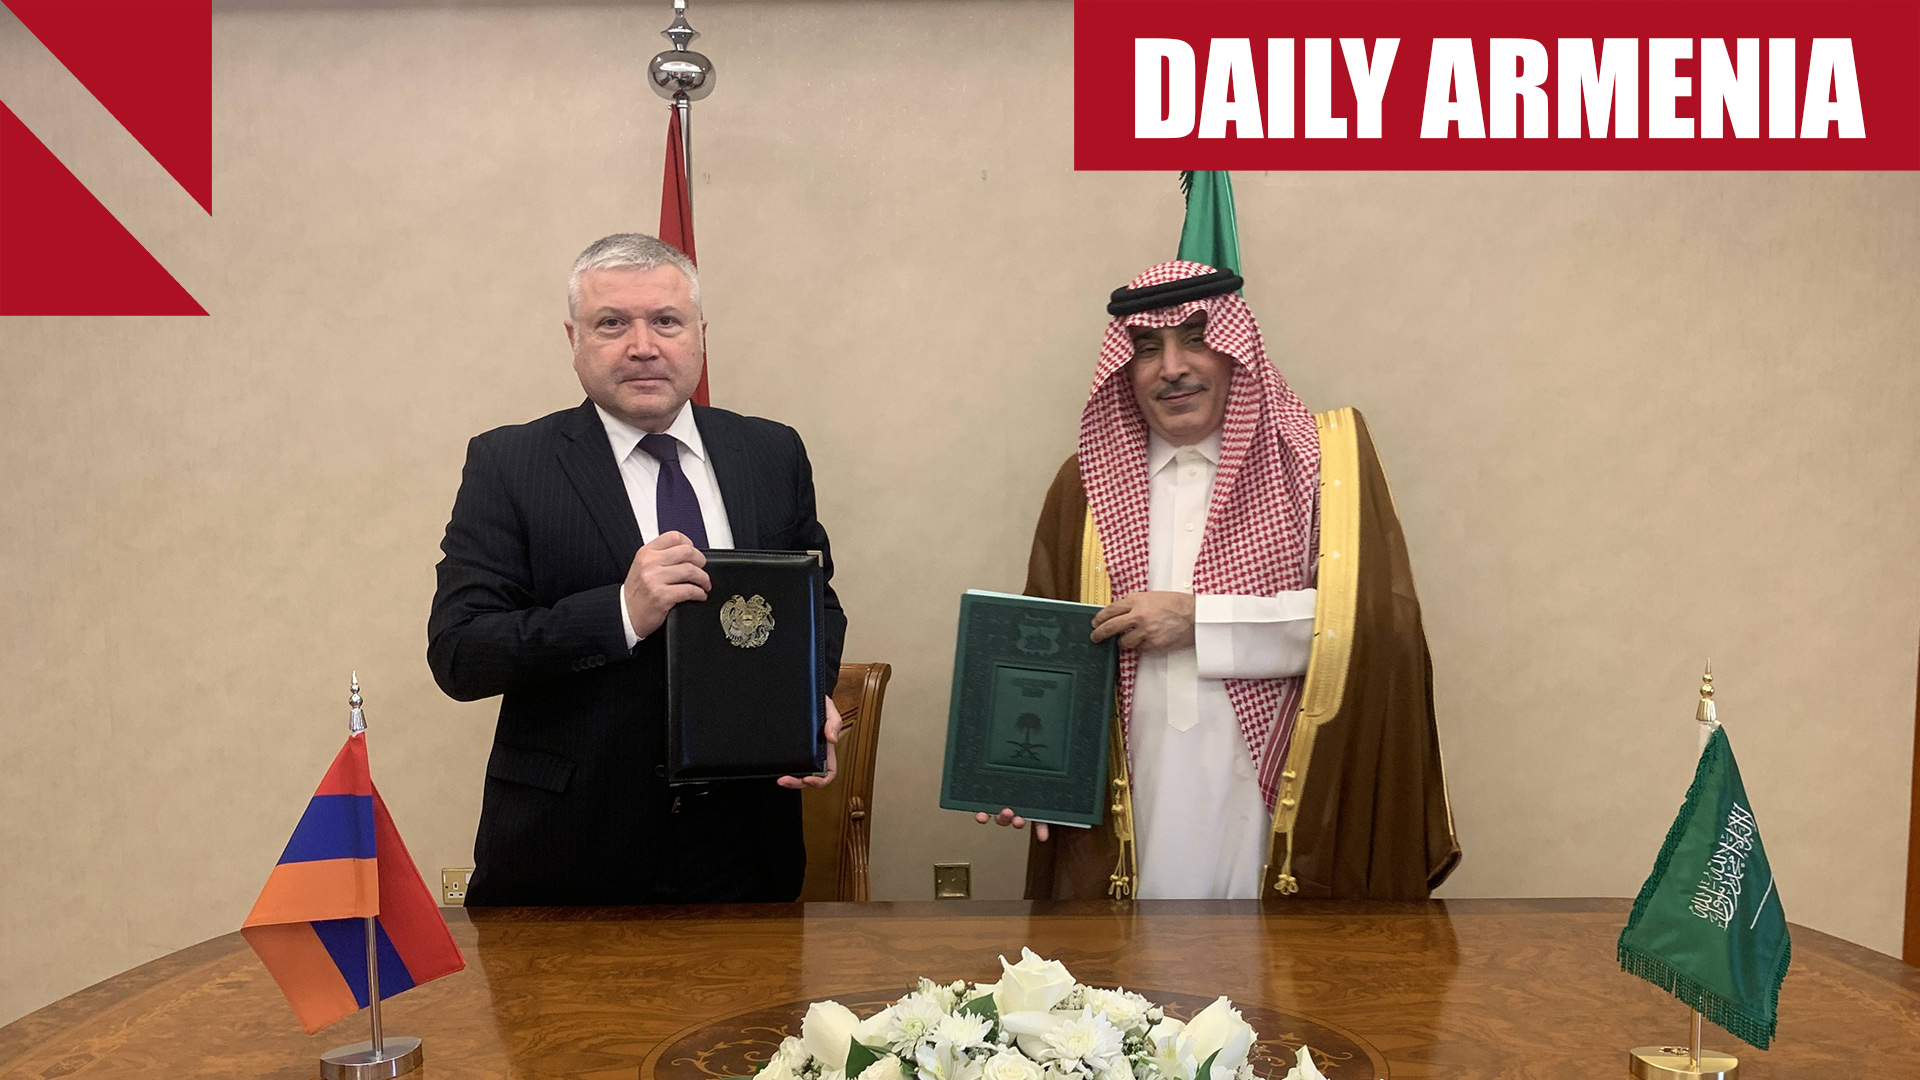 Armenia establishes relations with Saudi Arabia in historic move